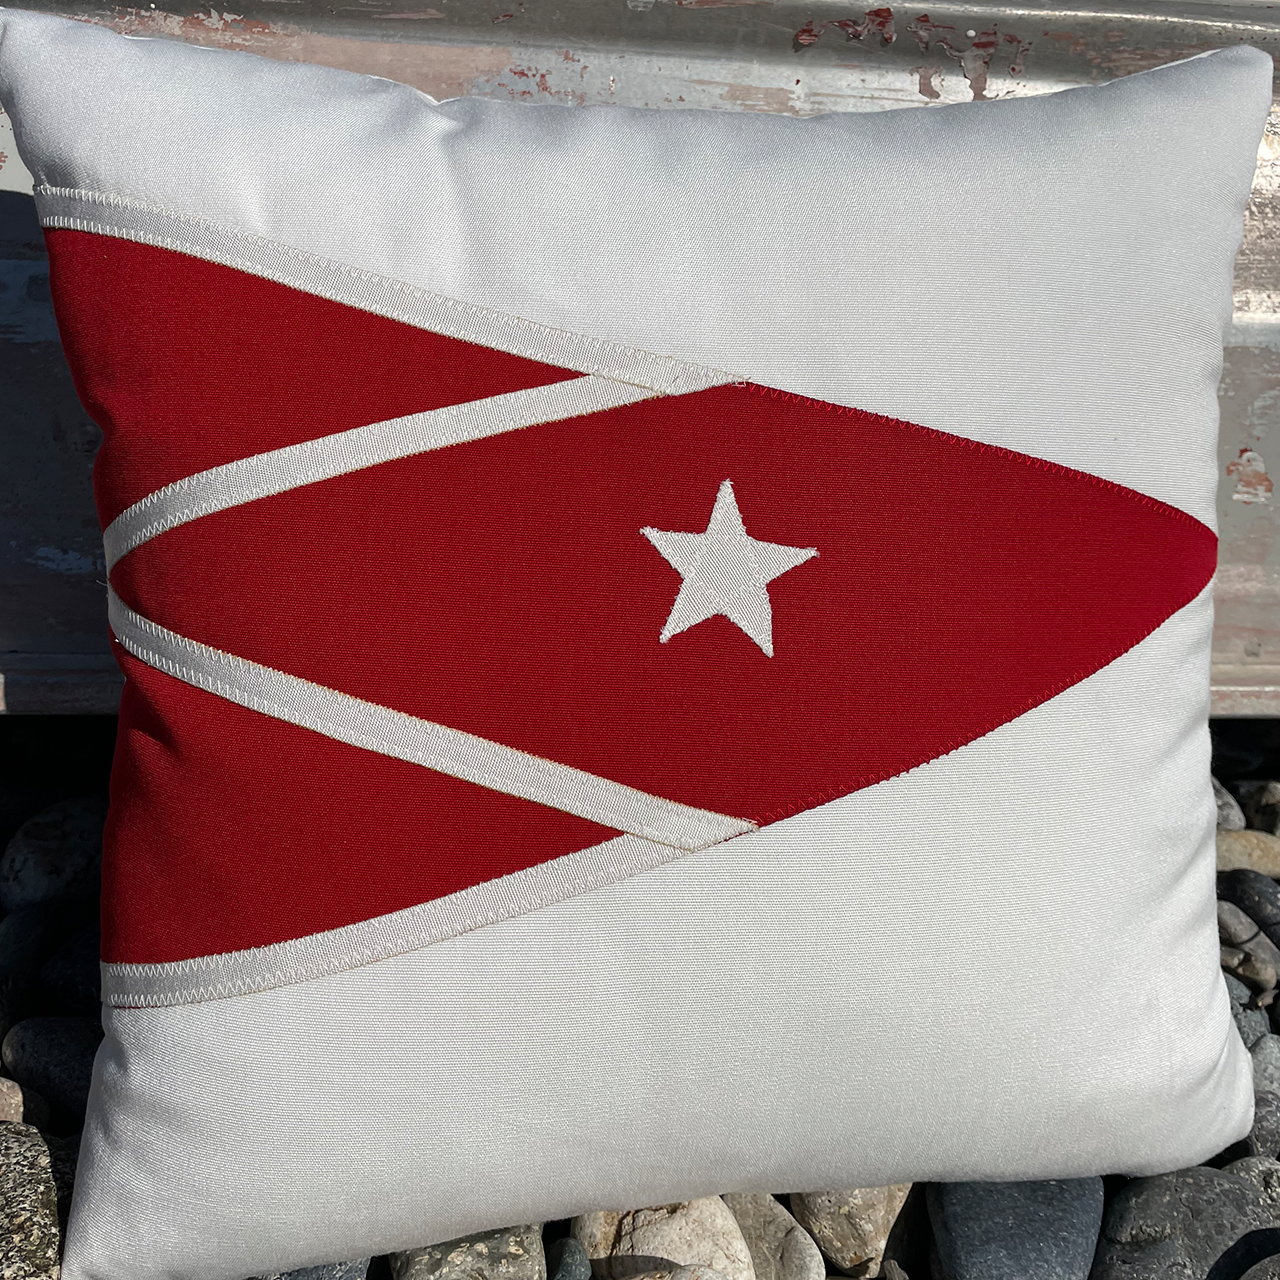 Marblehead Yacht Club Pillow